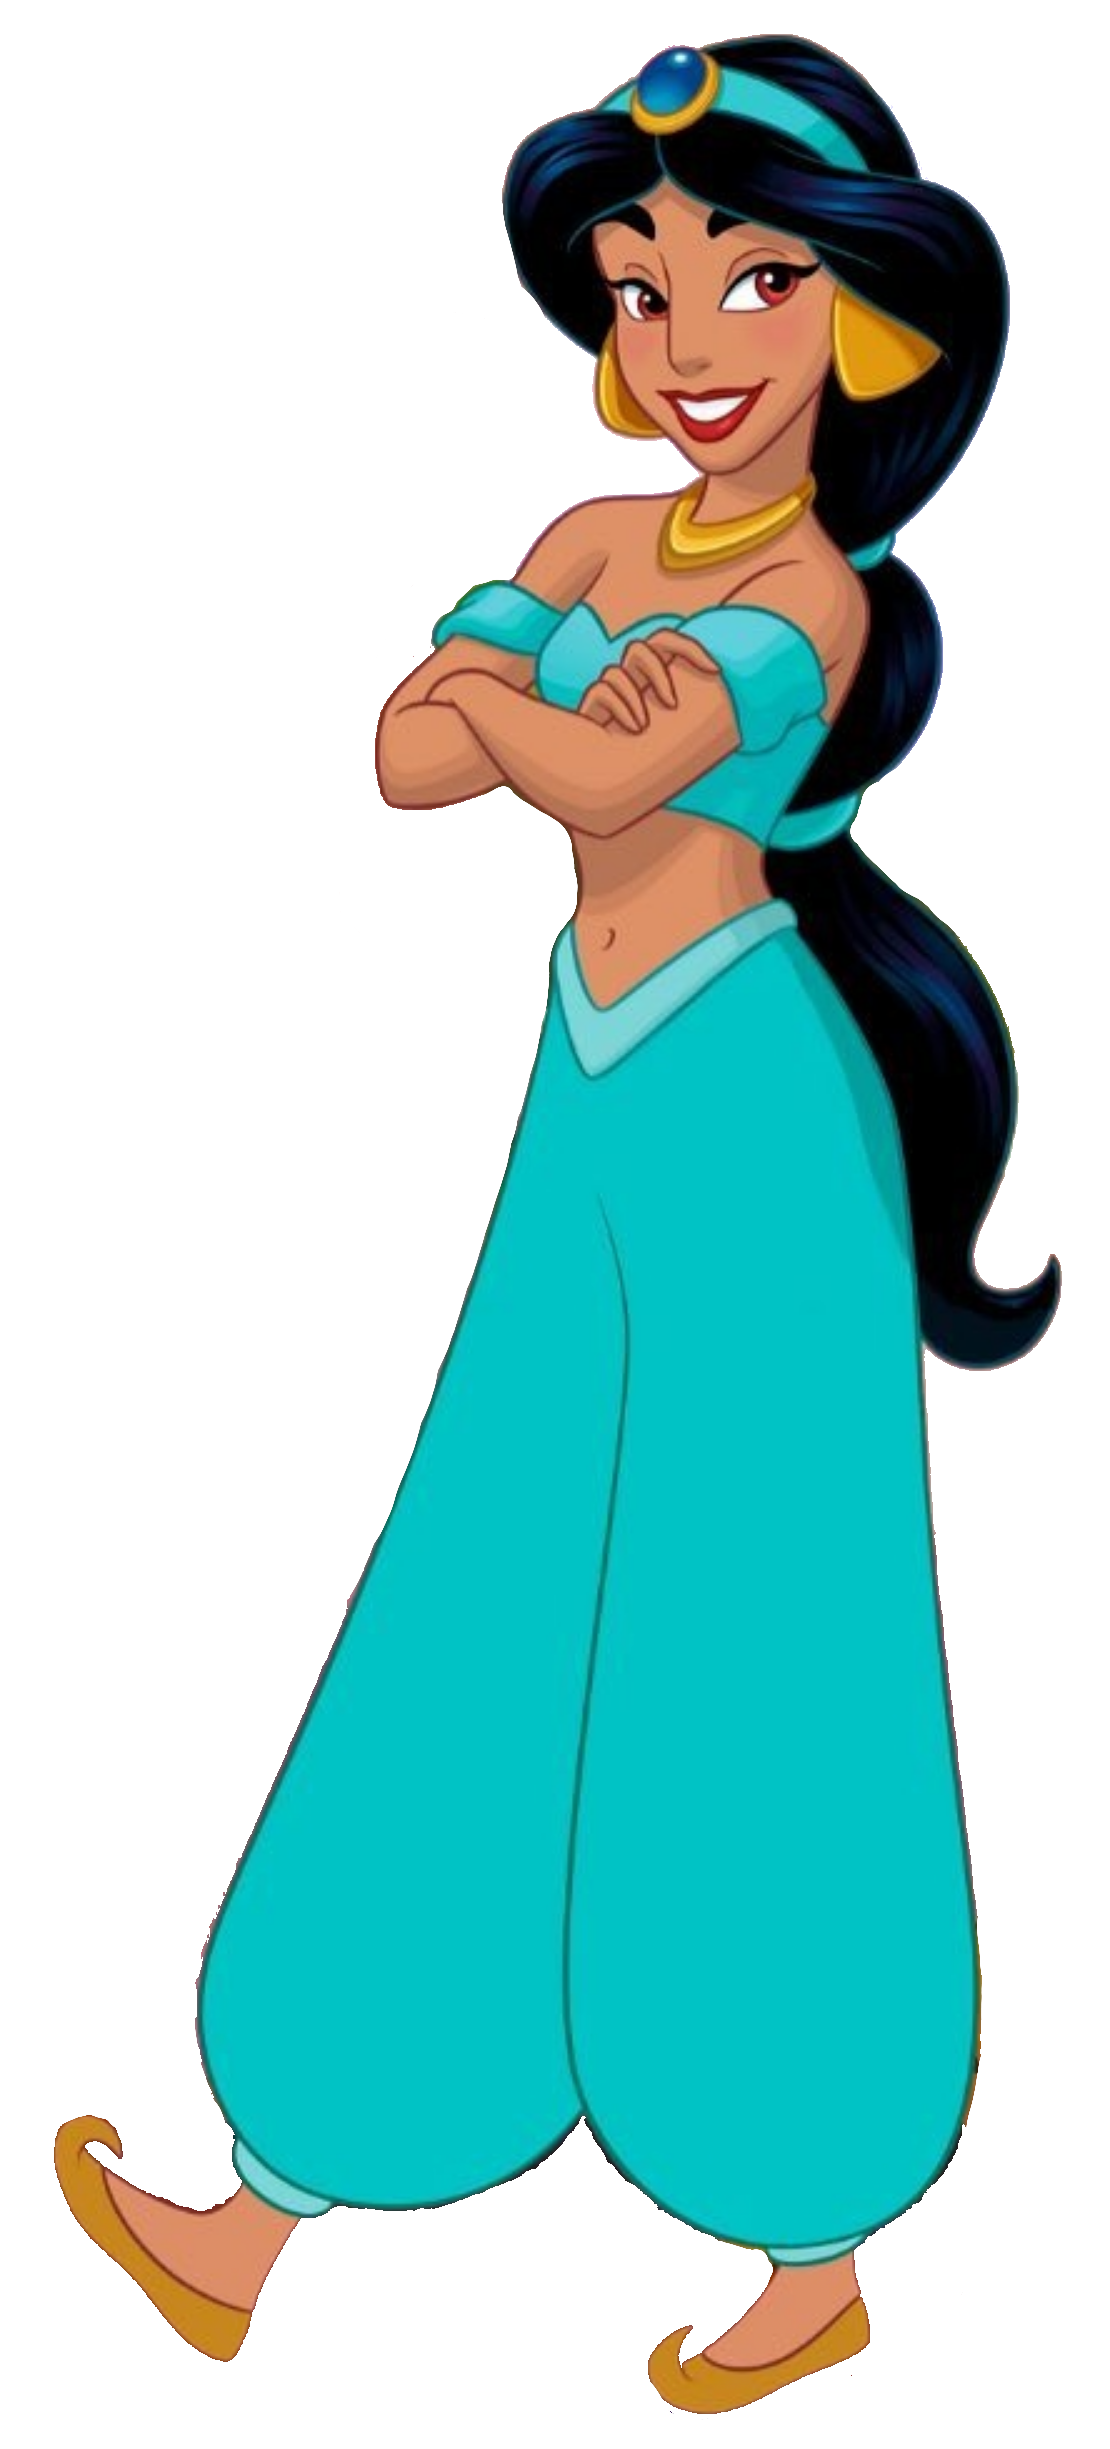 Jasmine | Disney Princess Wiki | Fandom